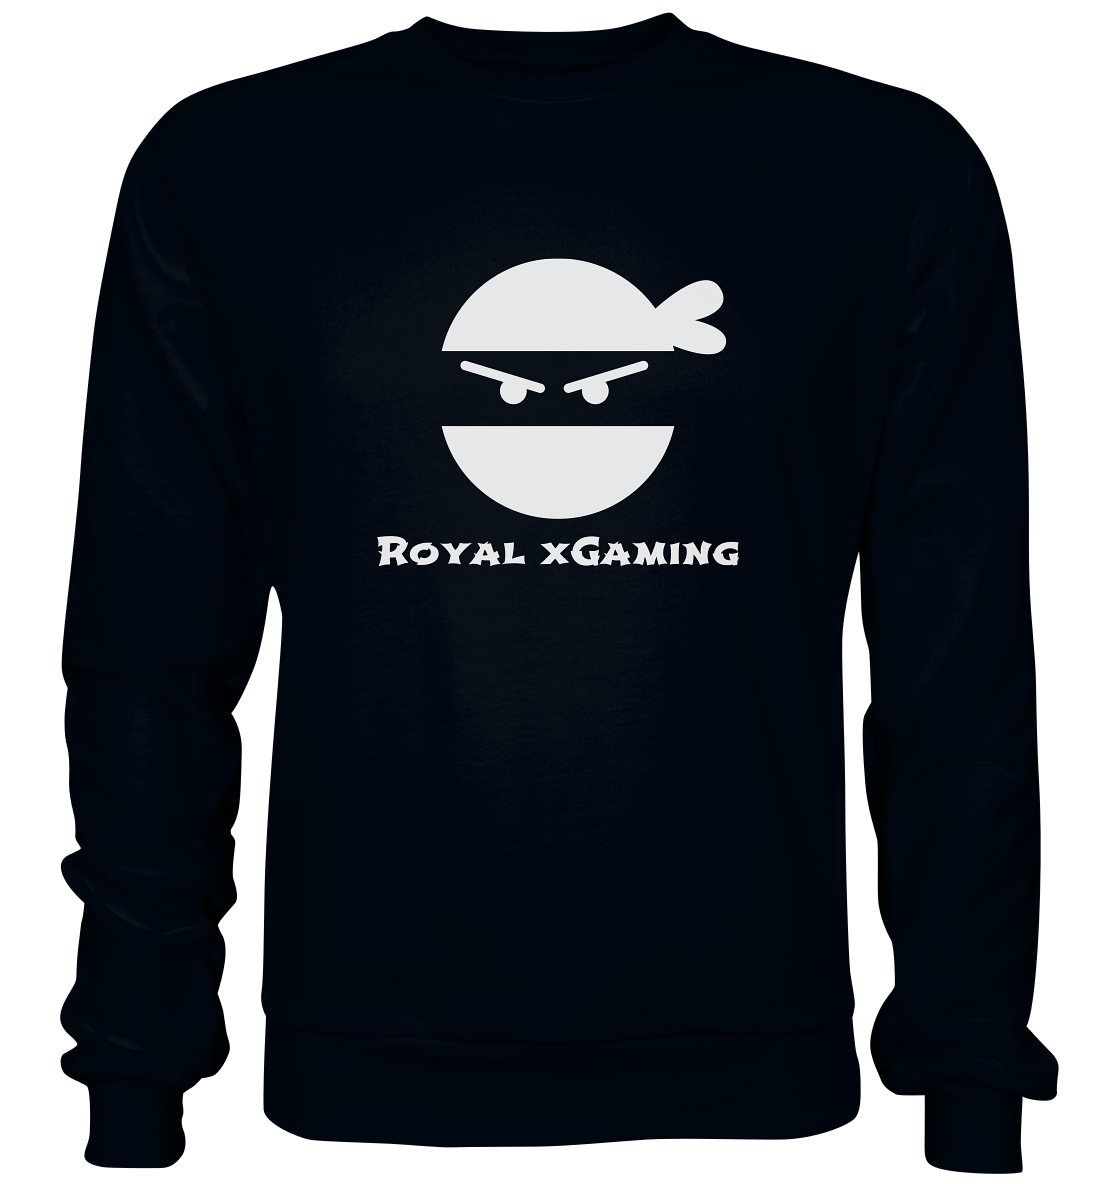 ROYAL XGAMING - Basic Sweatshirt